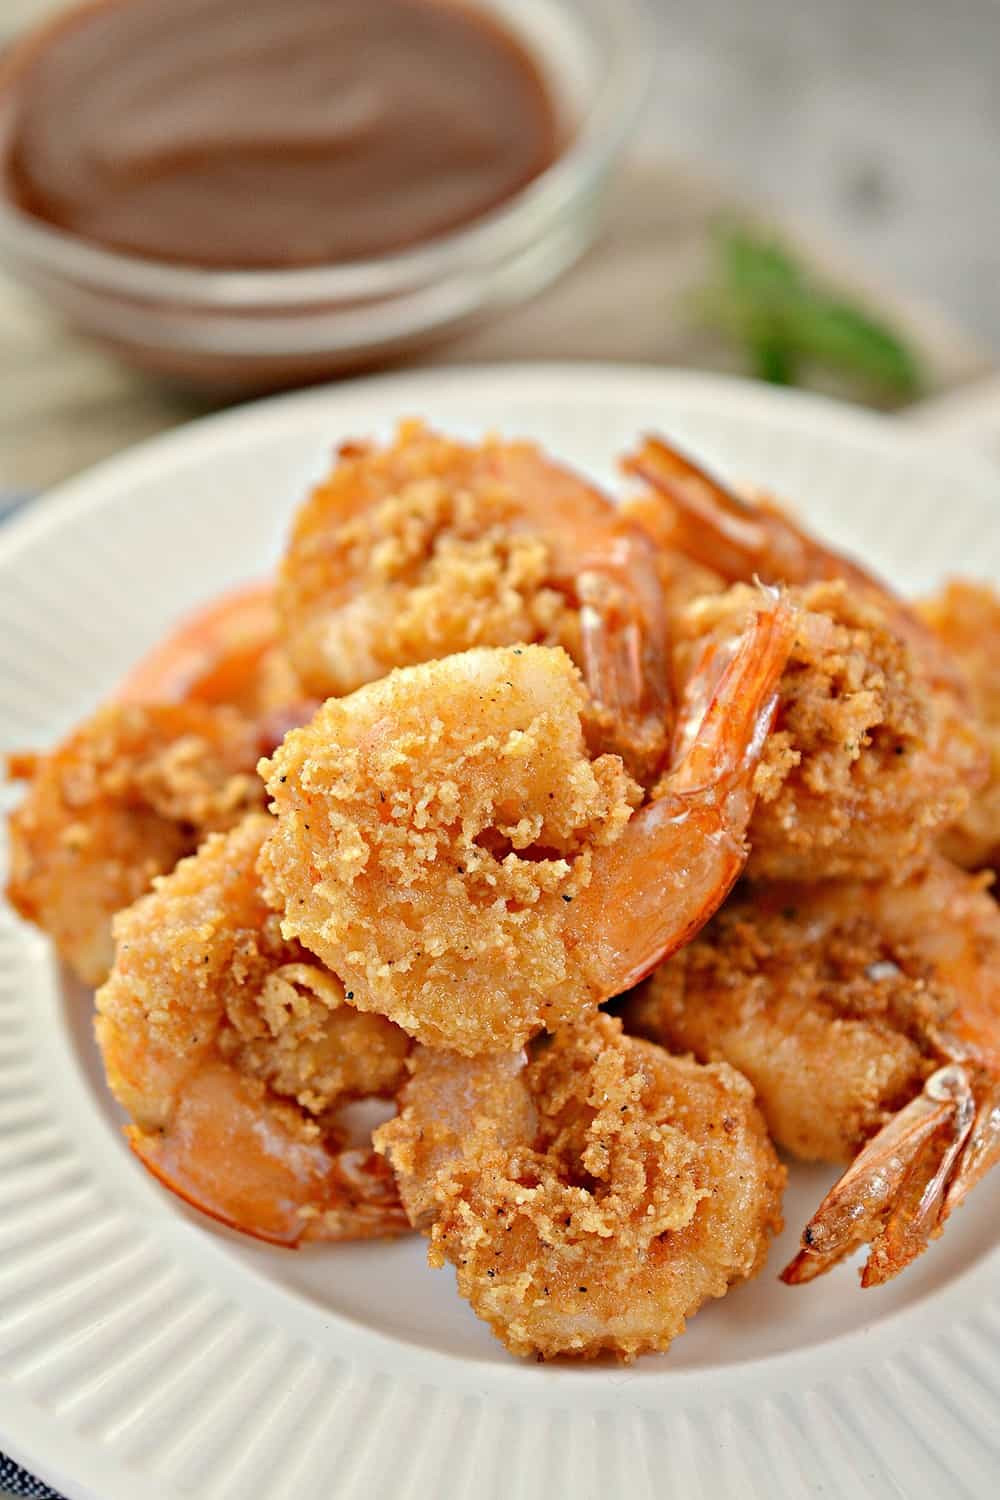 Air Fryer Shrimp Keto
 Keto Fried Shrimp Crispy Juicy OPTIONAL AIR FRYER